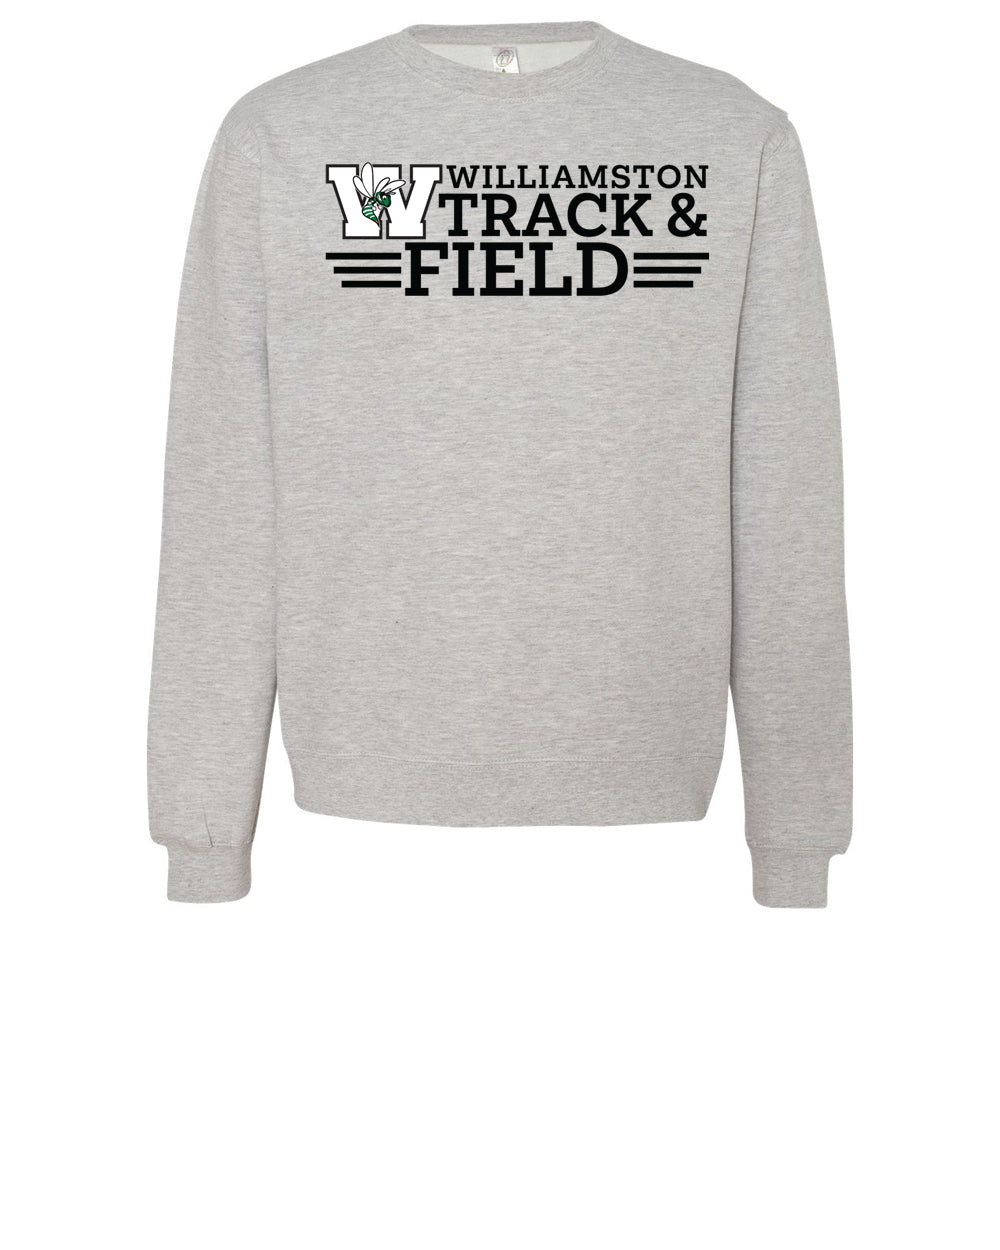 Williamston Track and Field - Sweatshirt